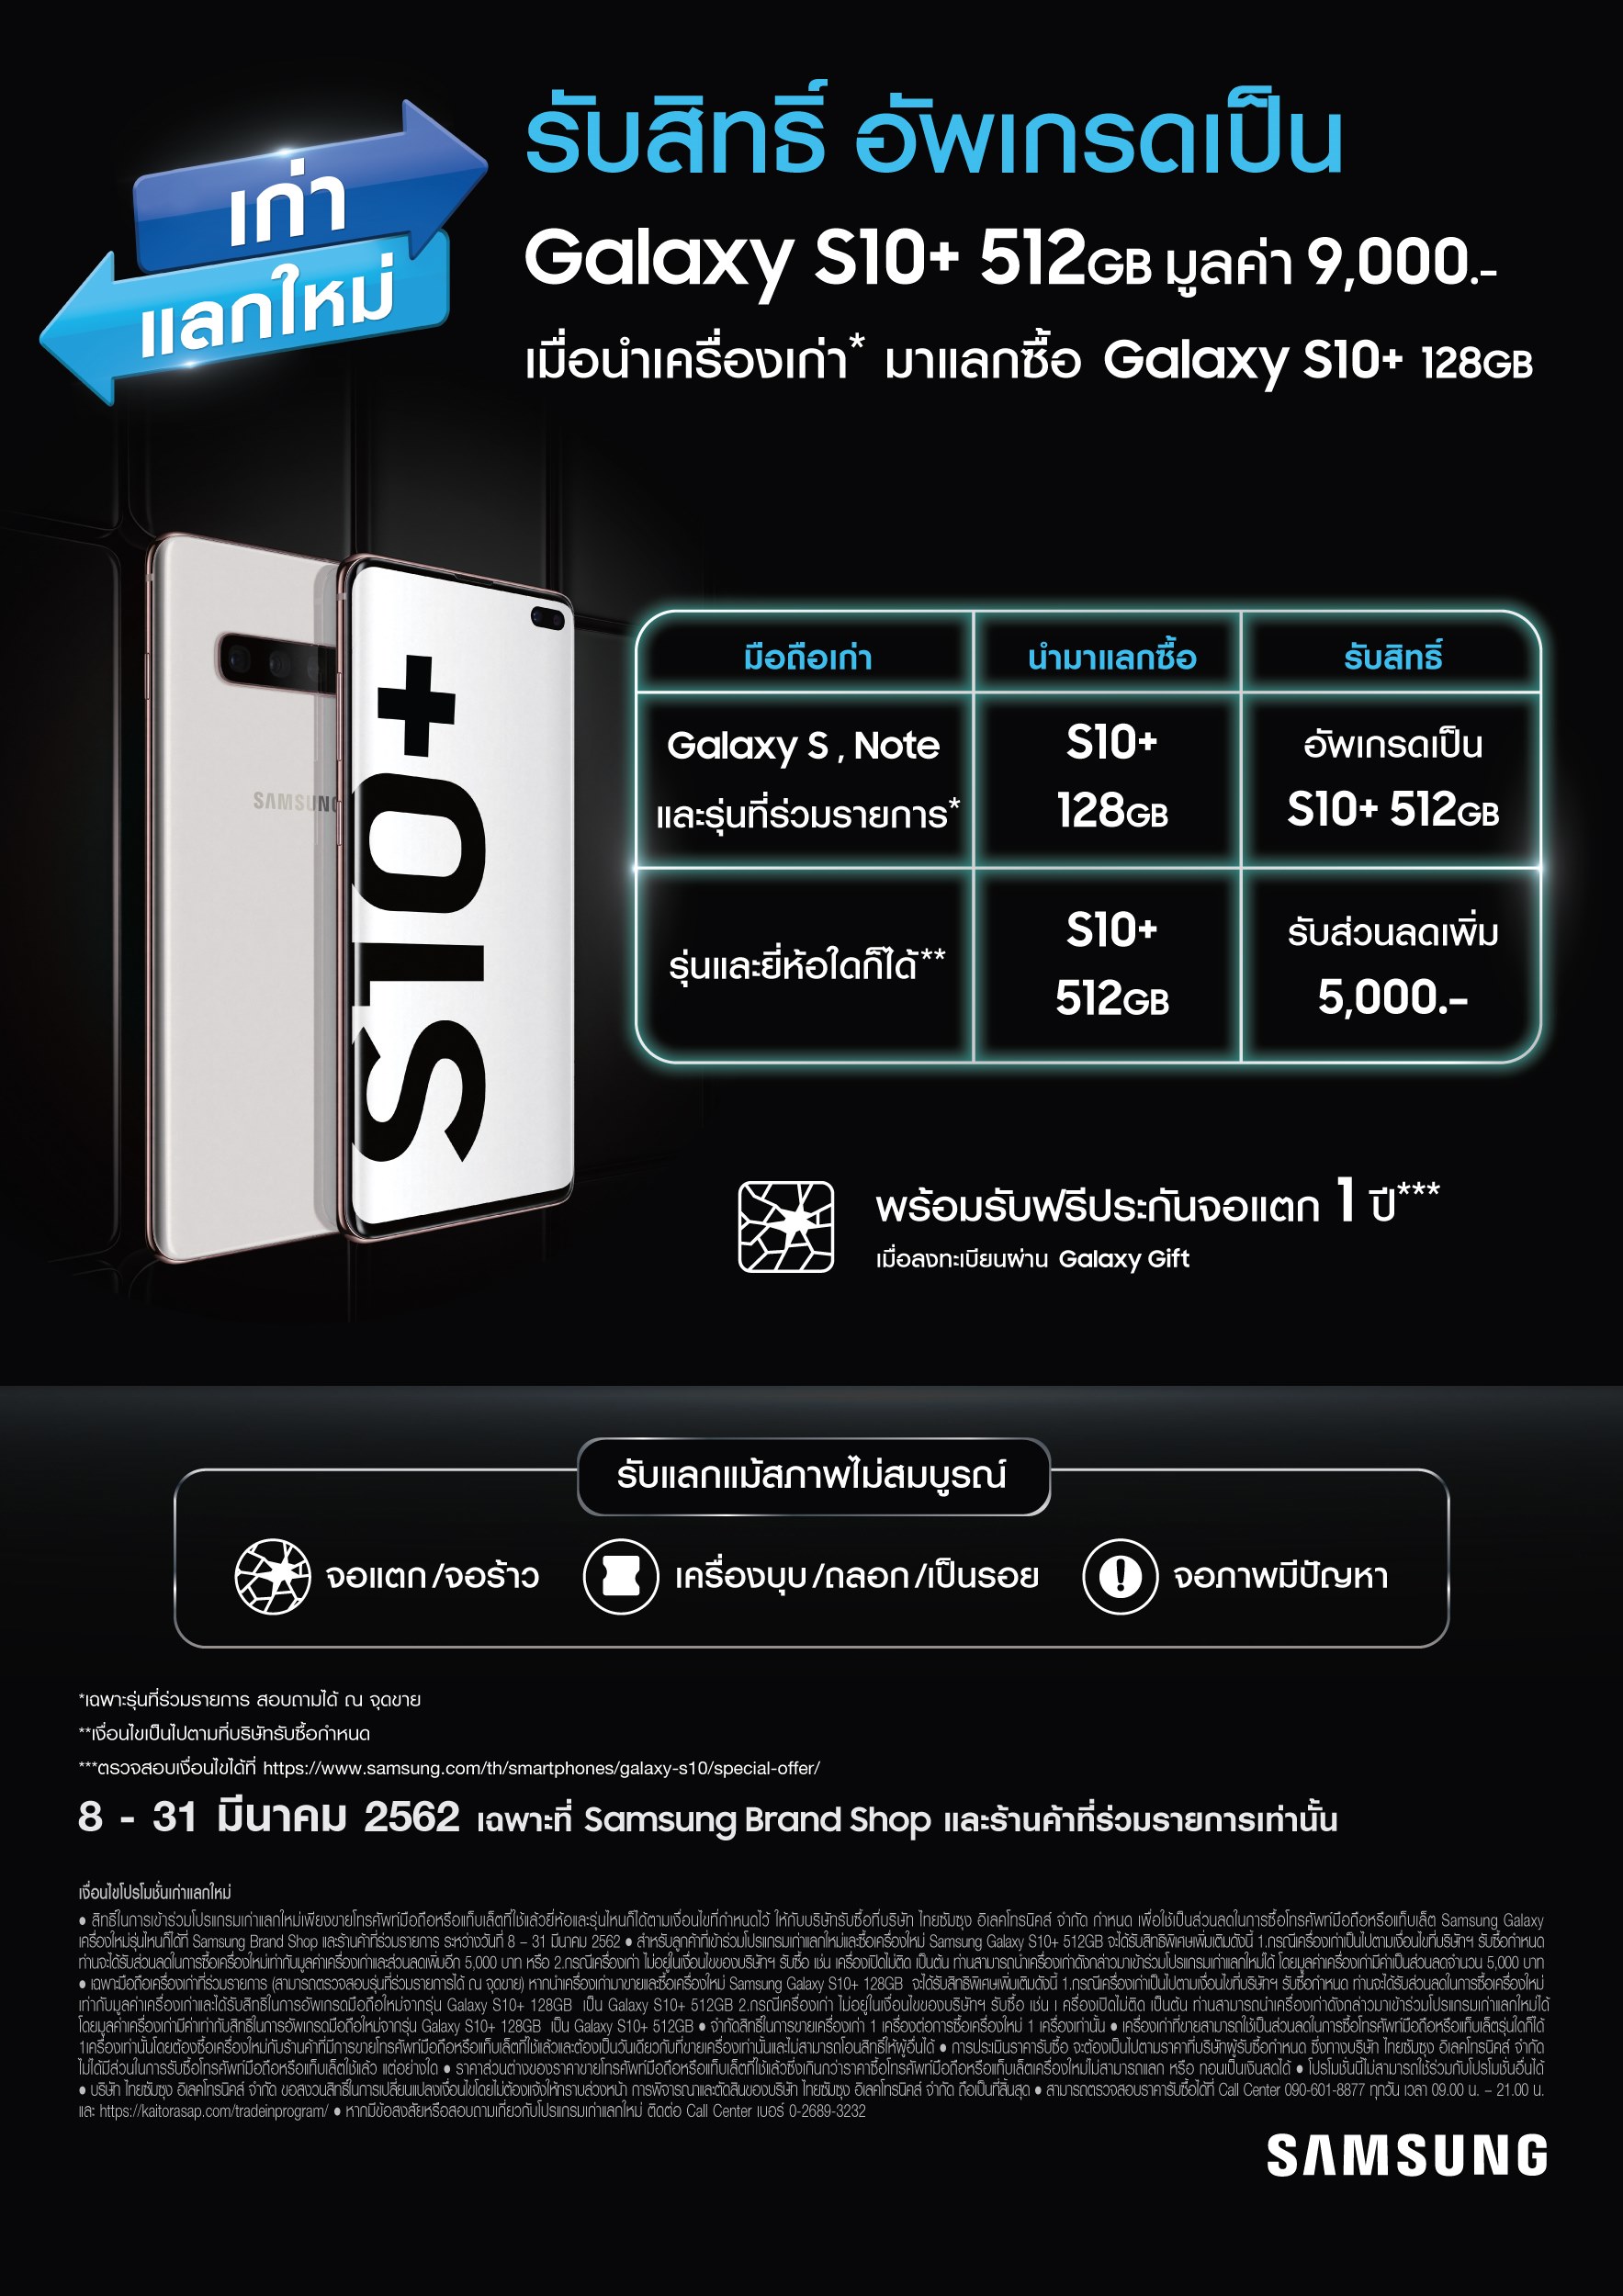 Promotion] เตรียมเฮ! Samsung จัดโปรฯ เก่าแลกใหม่ รับสิทธิพิเศษเป็นเจ้าของ  “Galaxy S10+” ในราคาสุดคุ้ม! - Specphone.Com